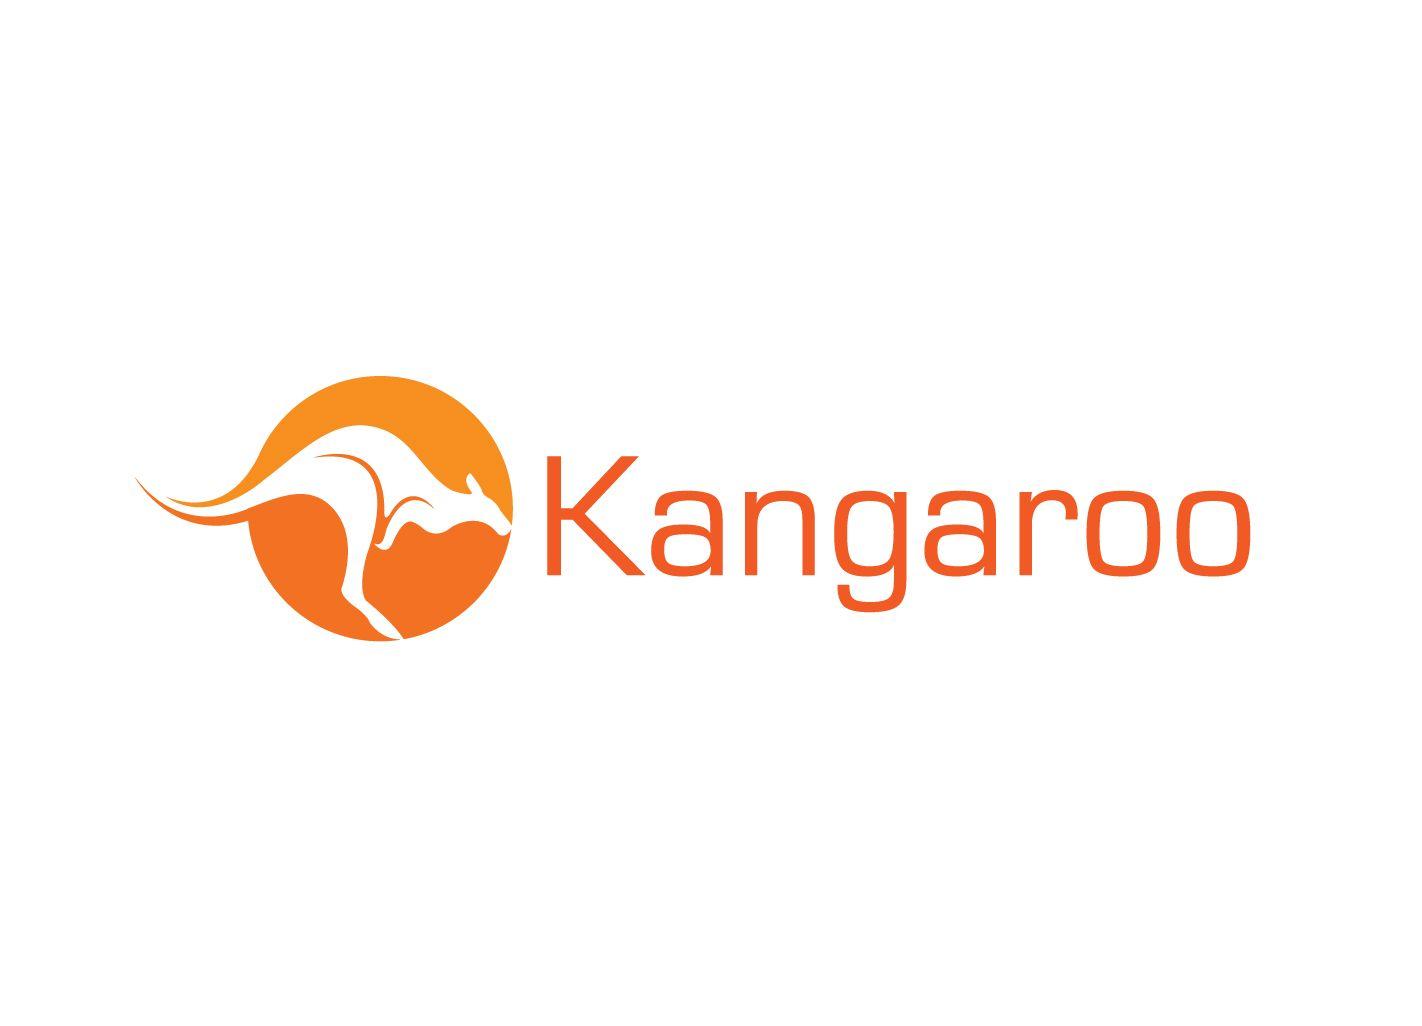 Kangaroo Company Logo - Upmarket, Playful, It Company Logo Design for Kangaroo